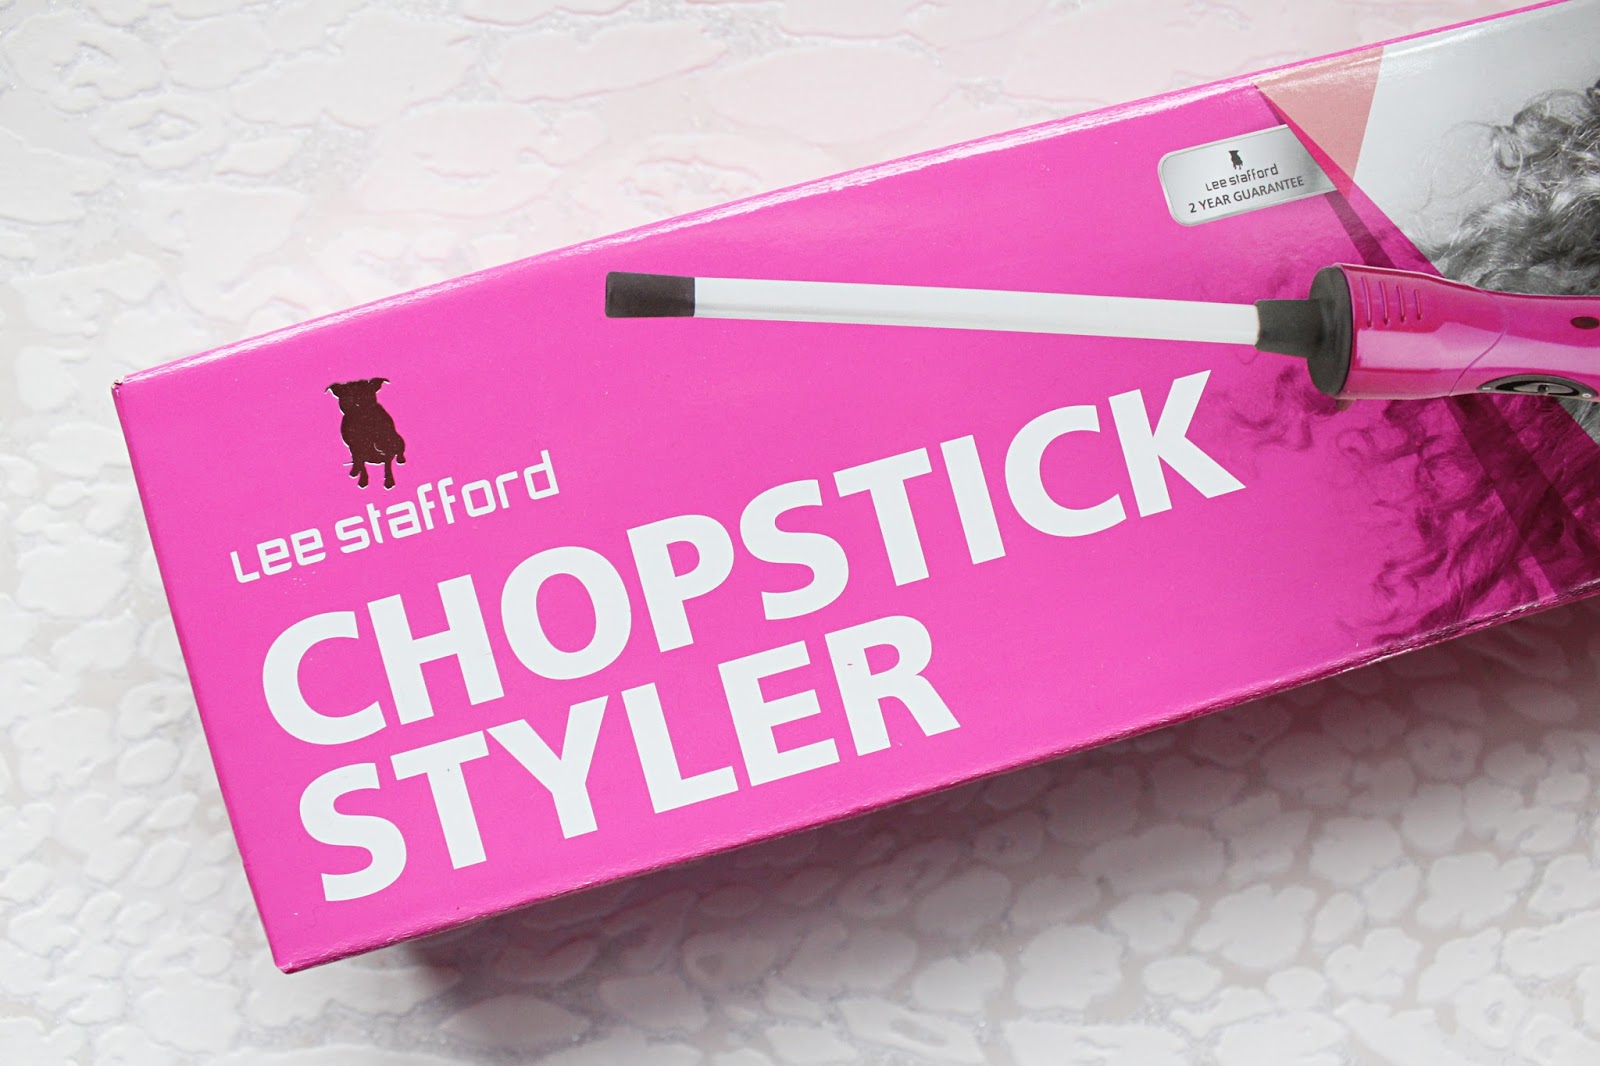 Lee Stafford Chopstick Styler